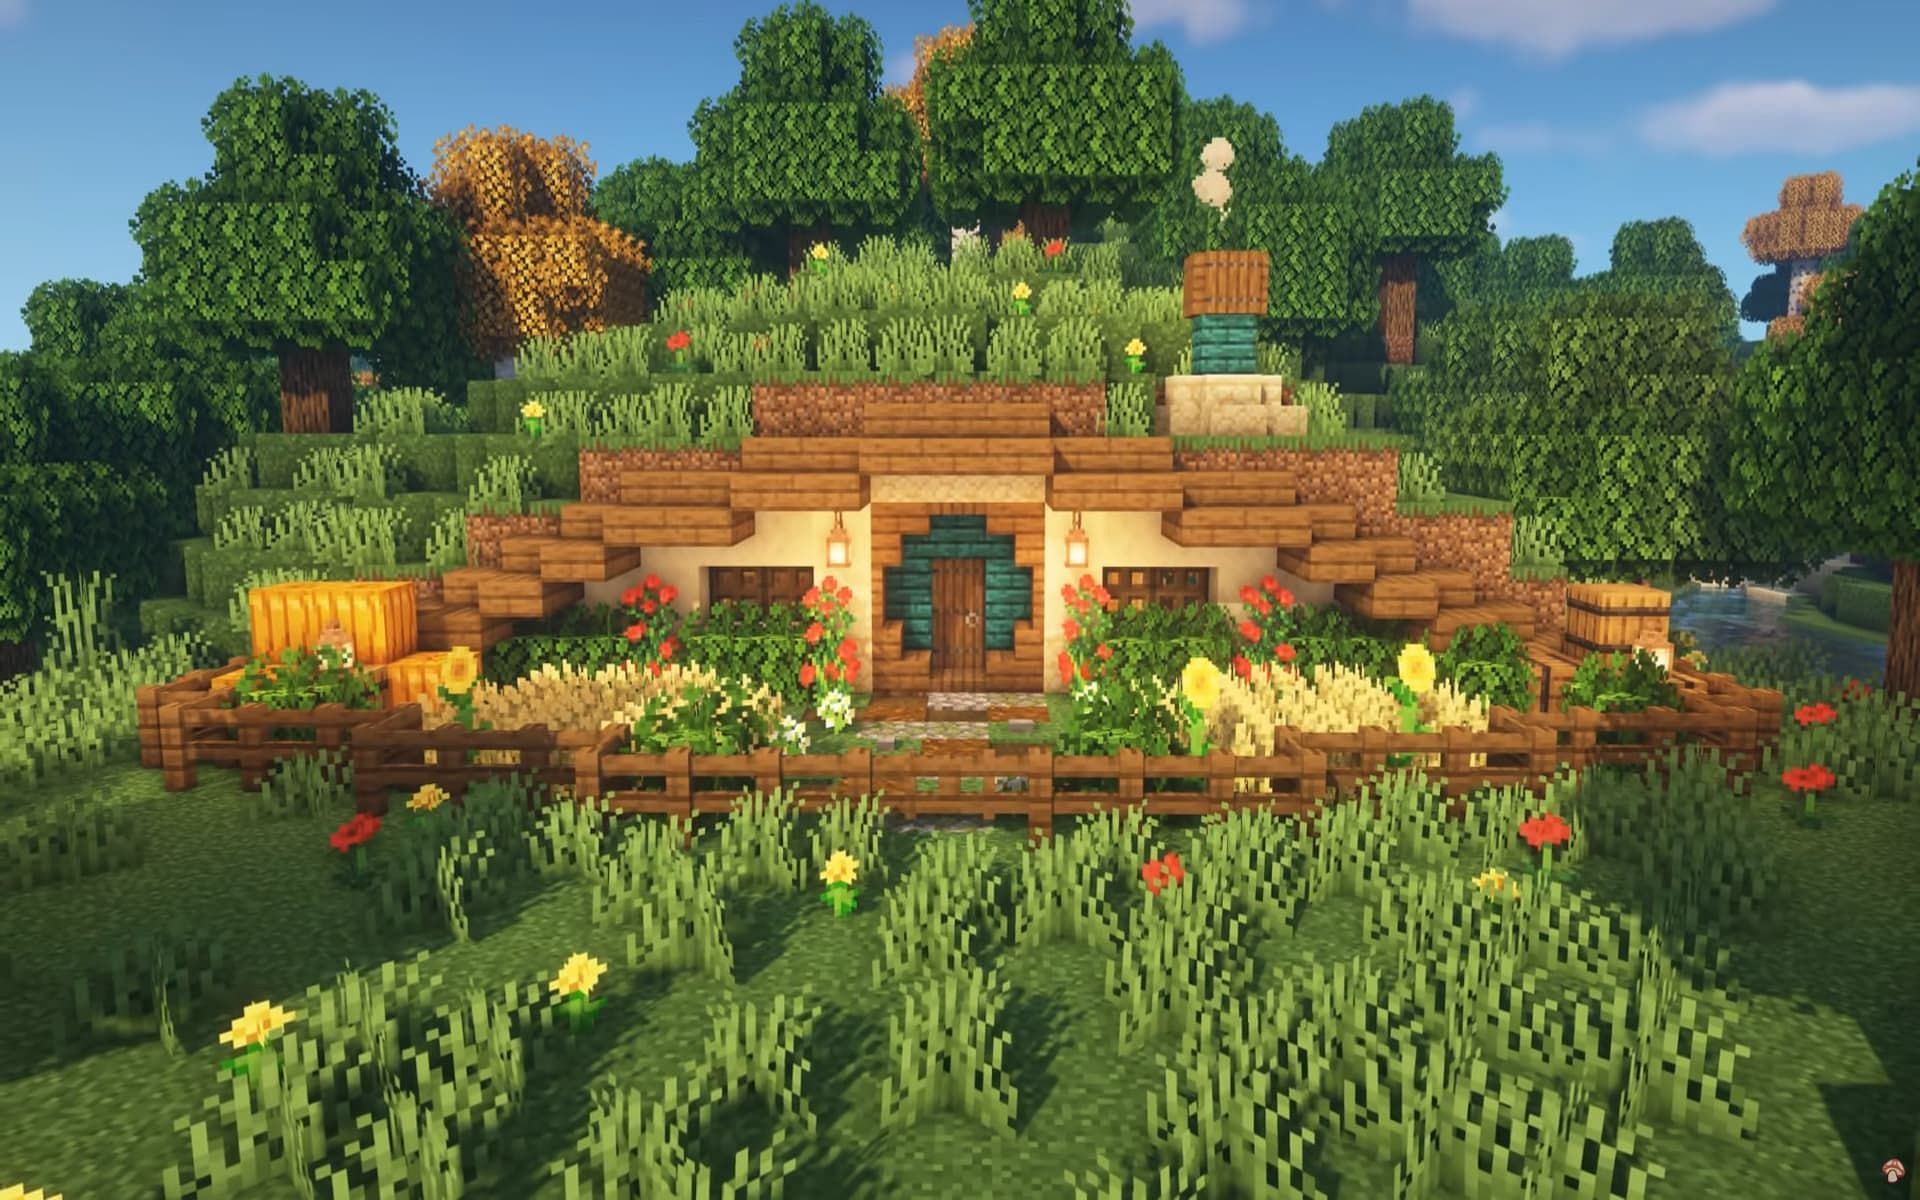 A Hobbit House built in Minecraft